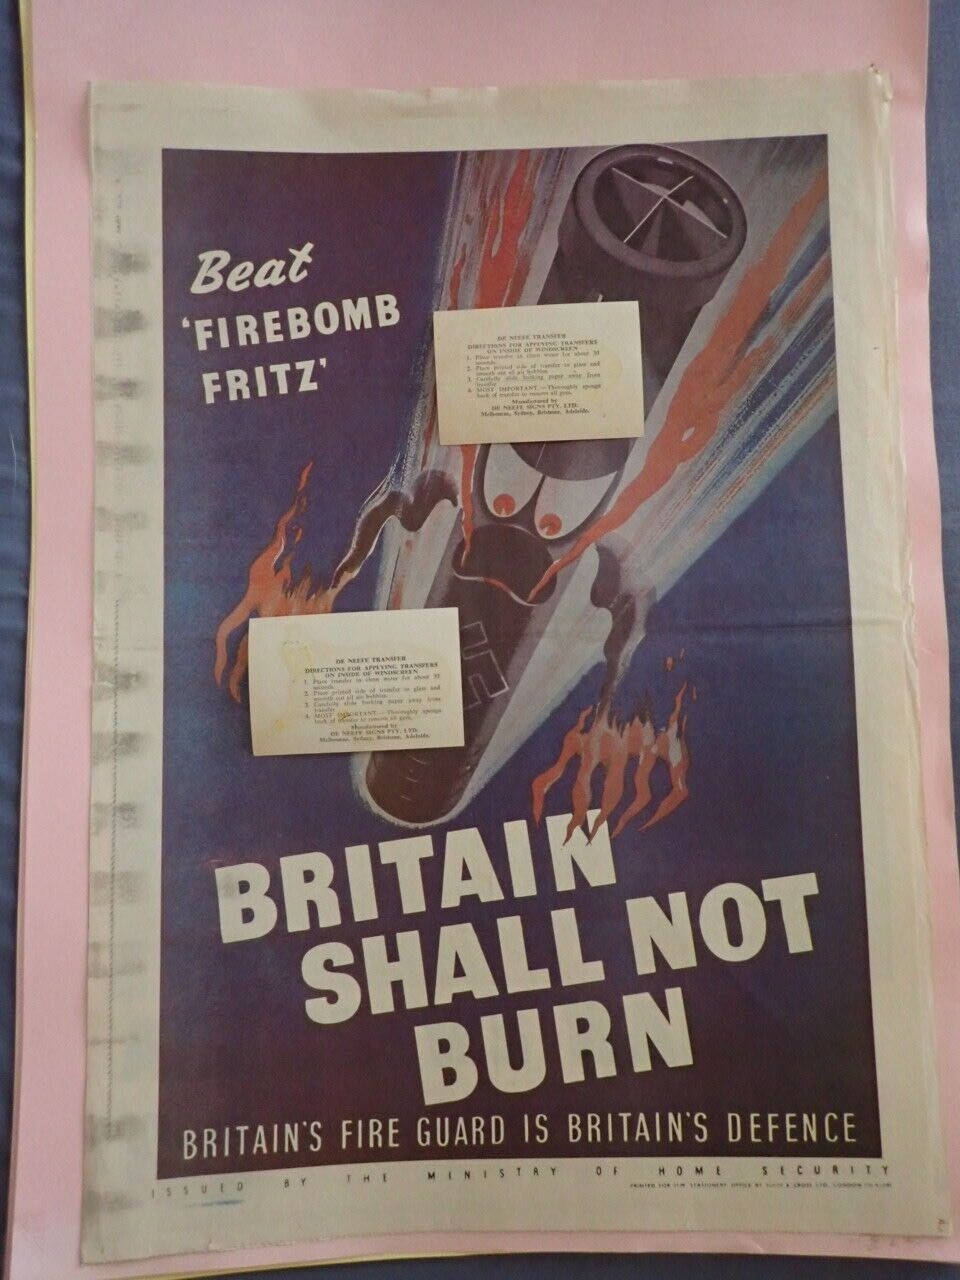 WORLD WAR II PROPAGANDA POSTER LONDON PAPER FIREBOMB FRITZ BRITAIN NOT BURN 1940